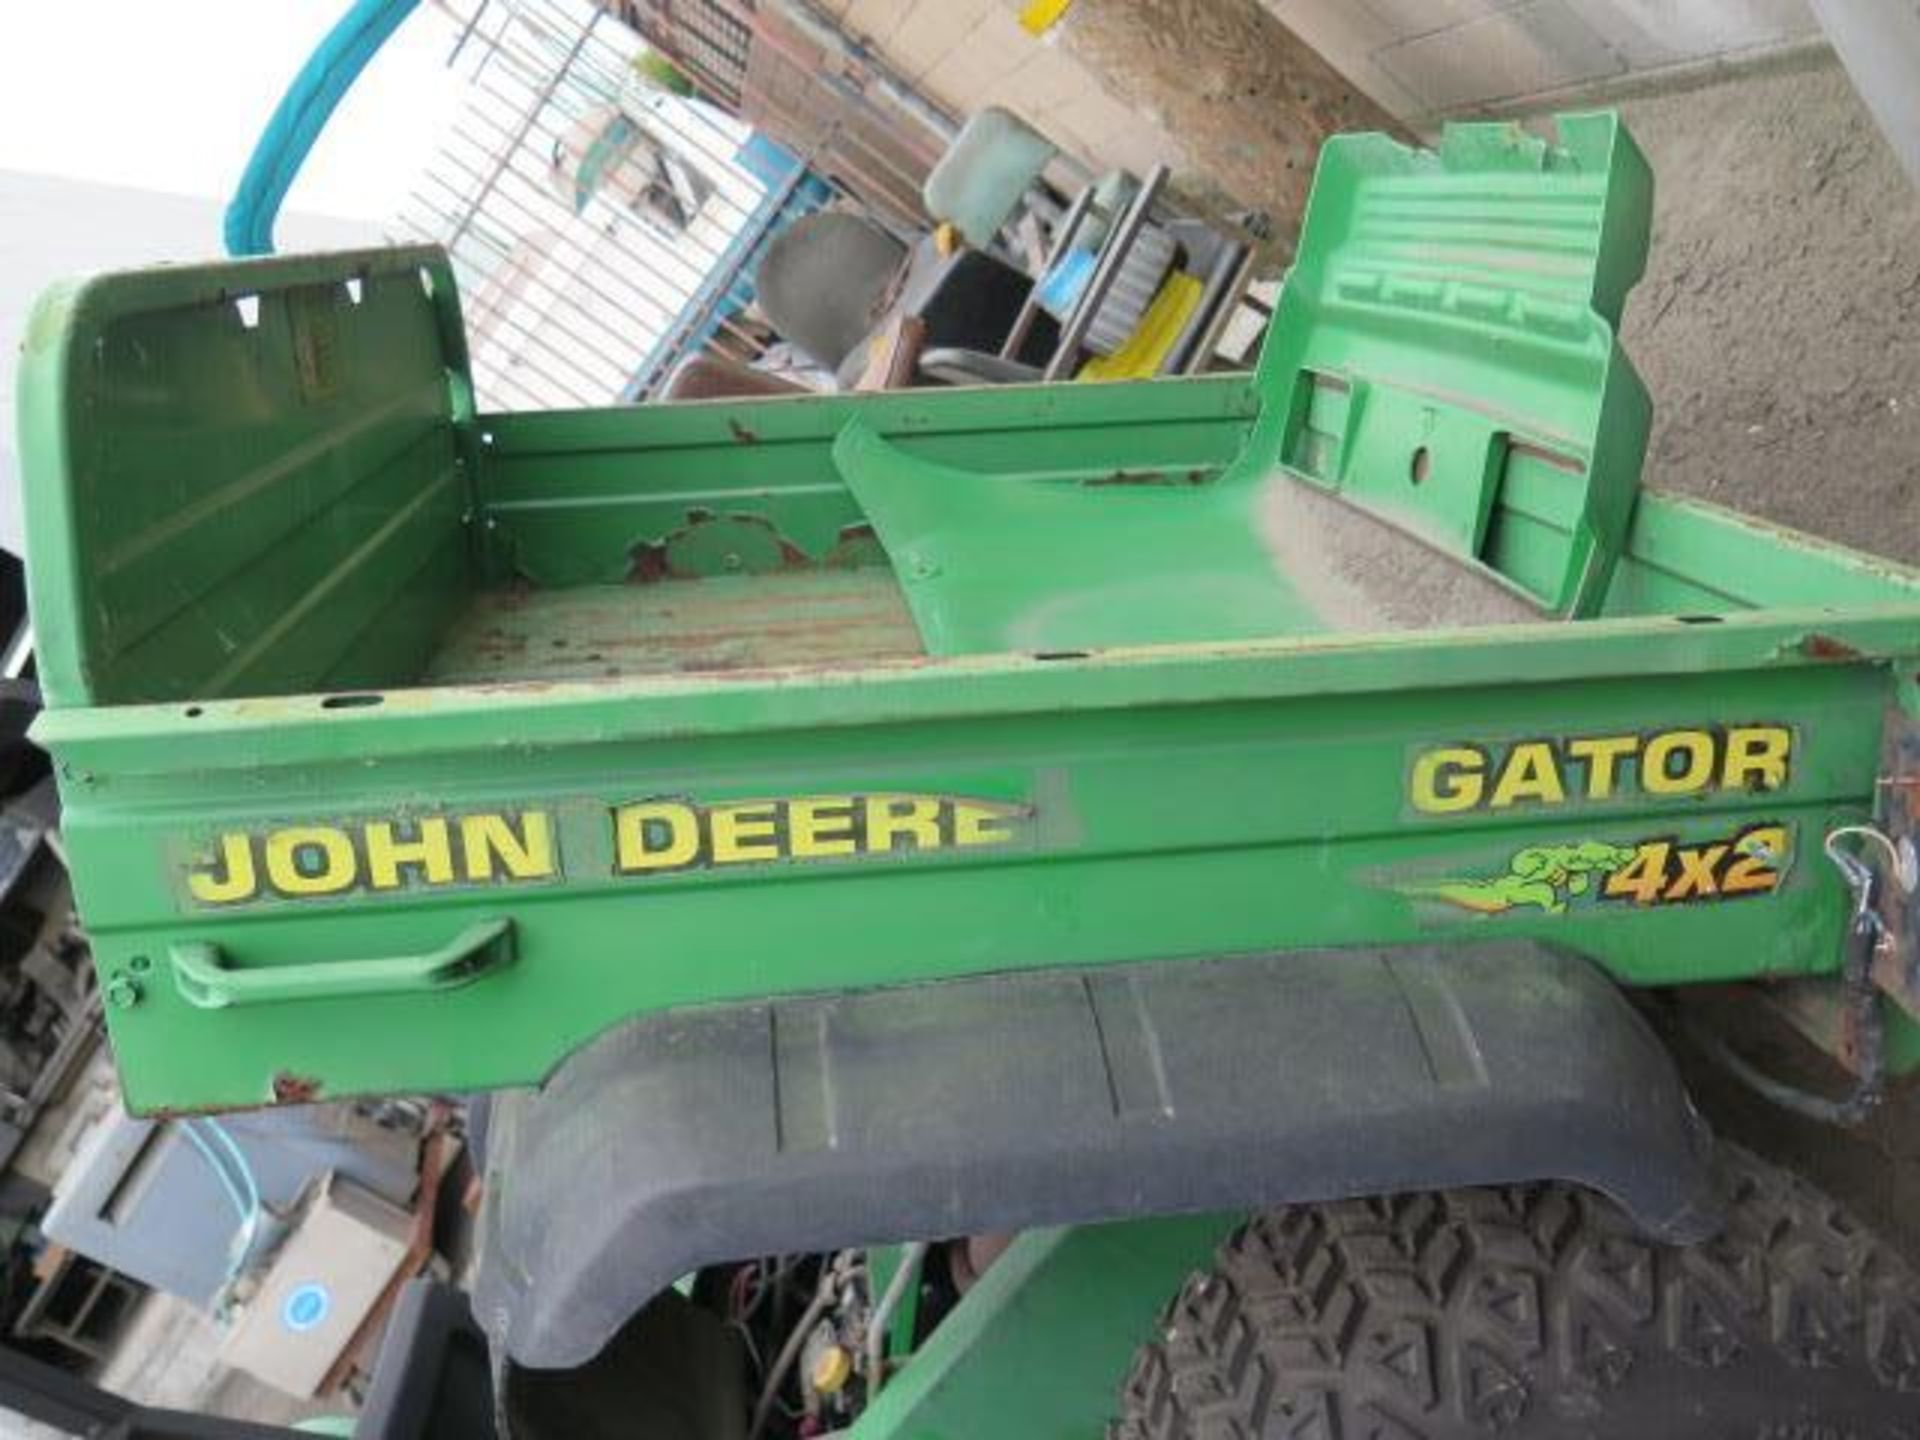 John Deere "Gator" Gas Powered Dump Vehicle (NEEDS REPAIR) (SOLD AS-IS - NO WARRANTY) - Image 8 of 10